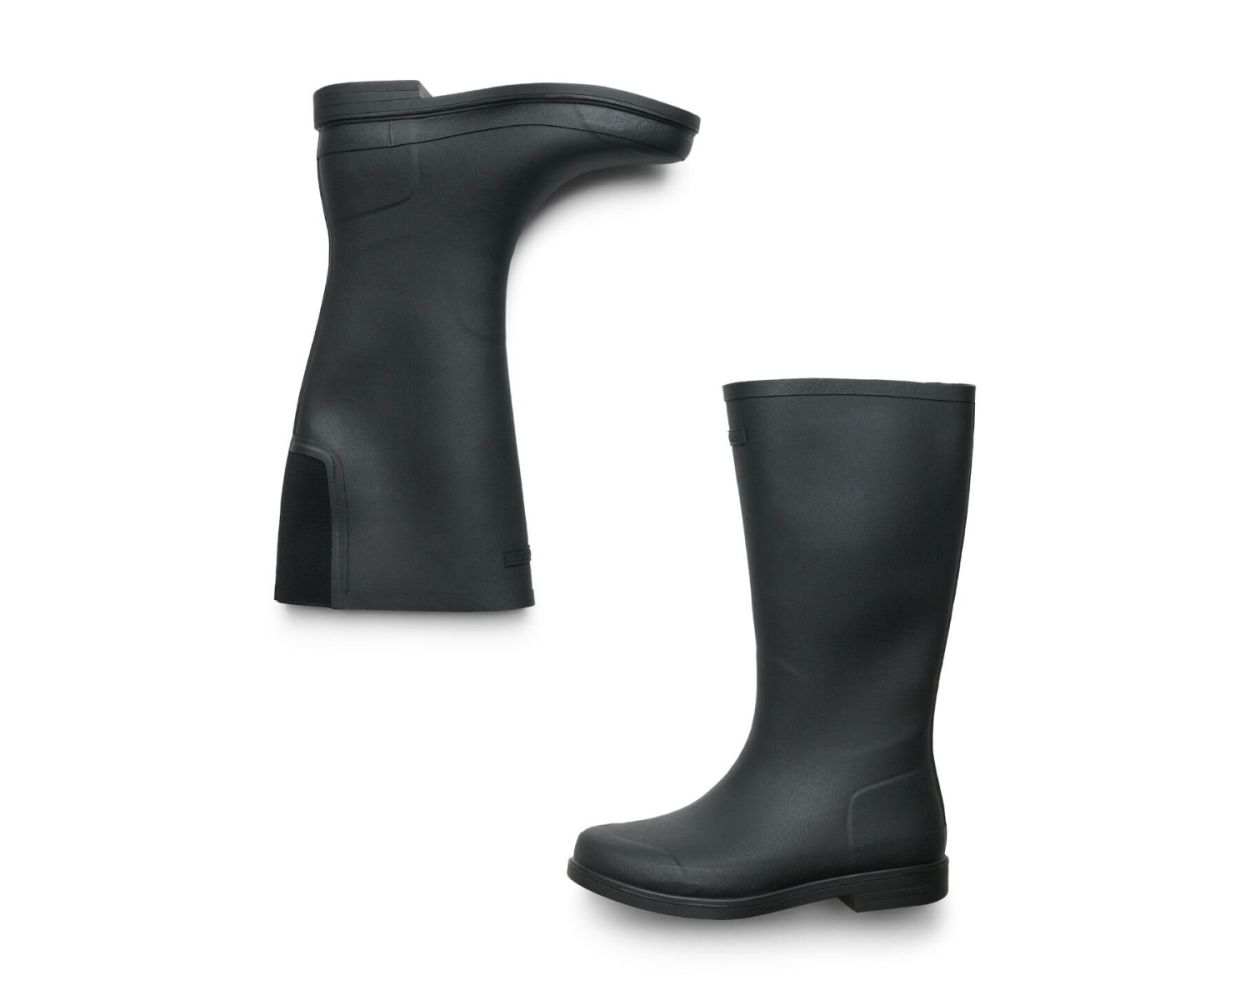 shoes - TRETORN - Eva High H2O Proof Rubber Boot - PLENTY